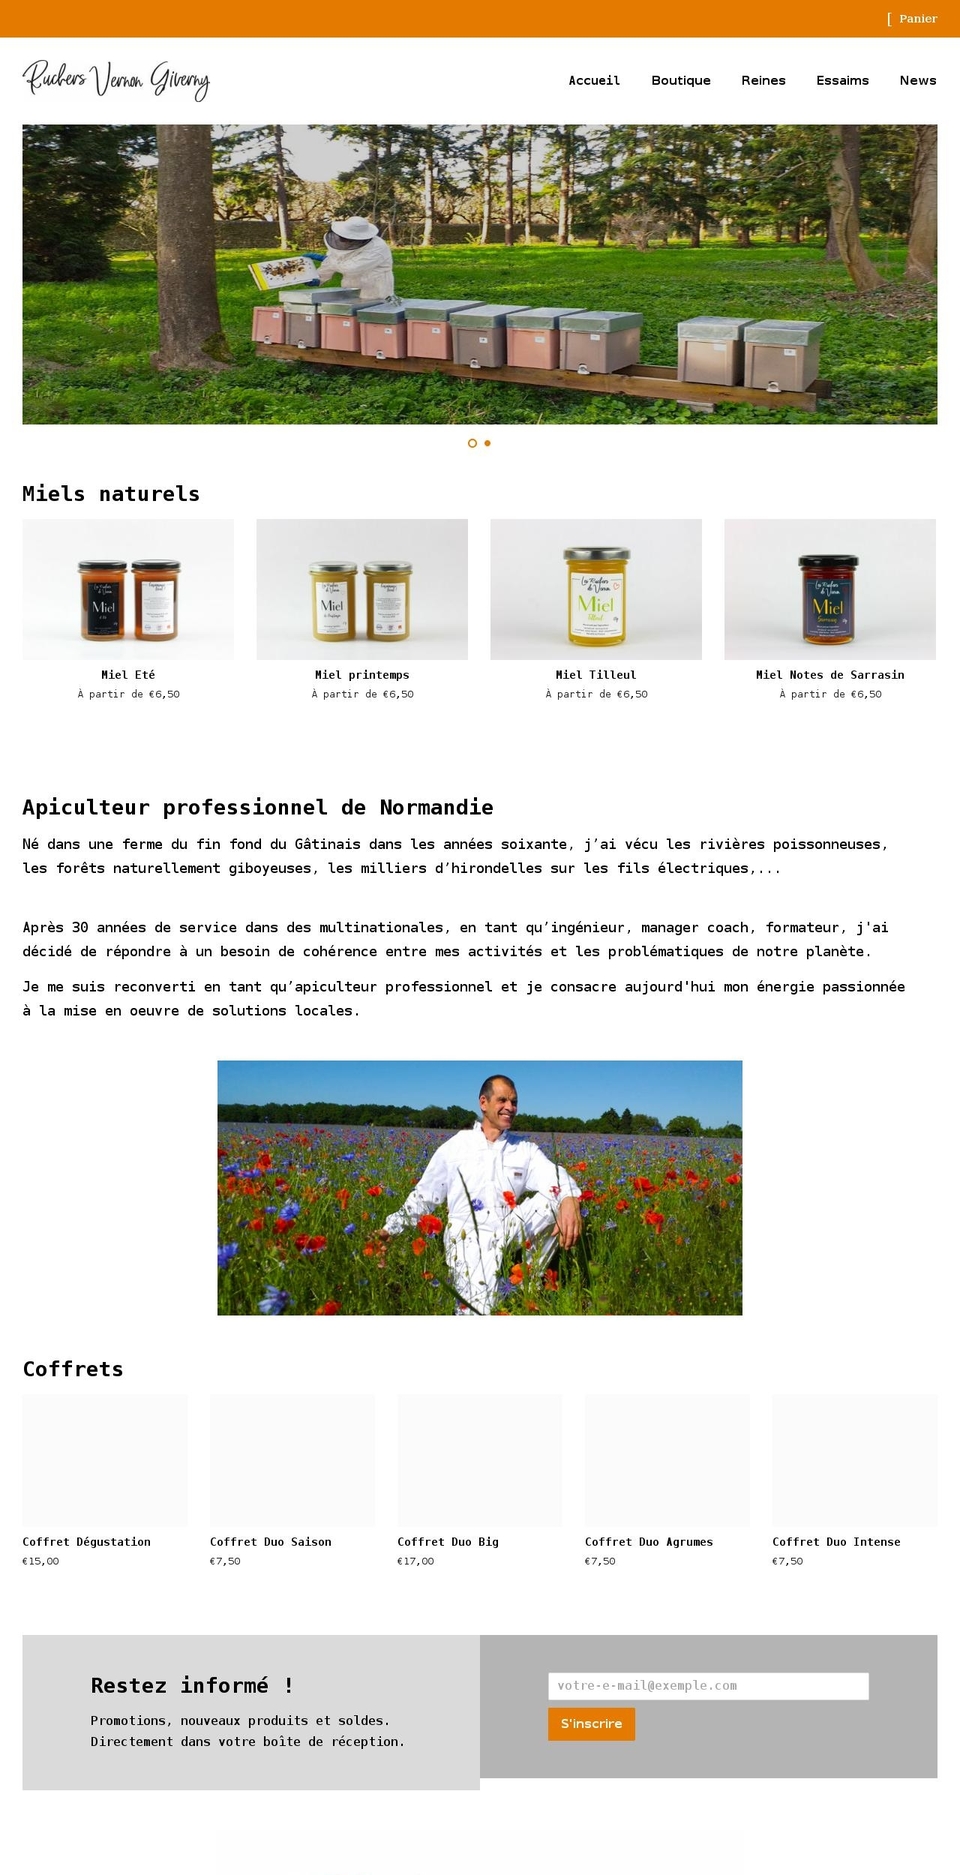 lesruchersdevernon.fr shopify website screenshot